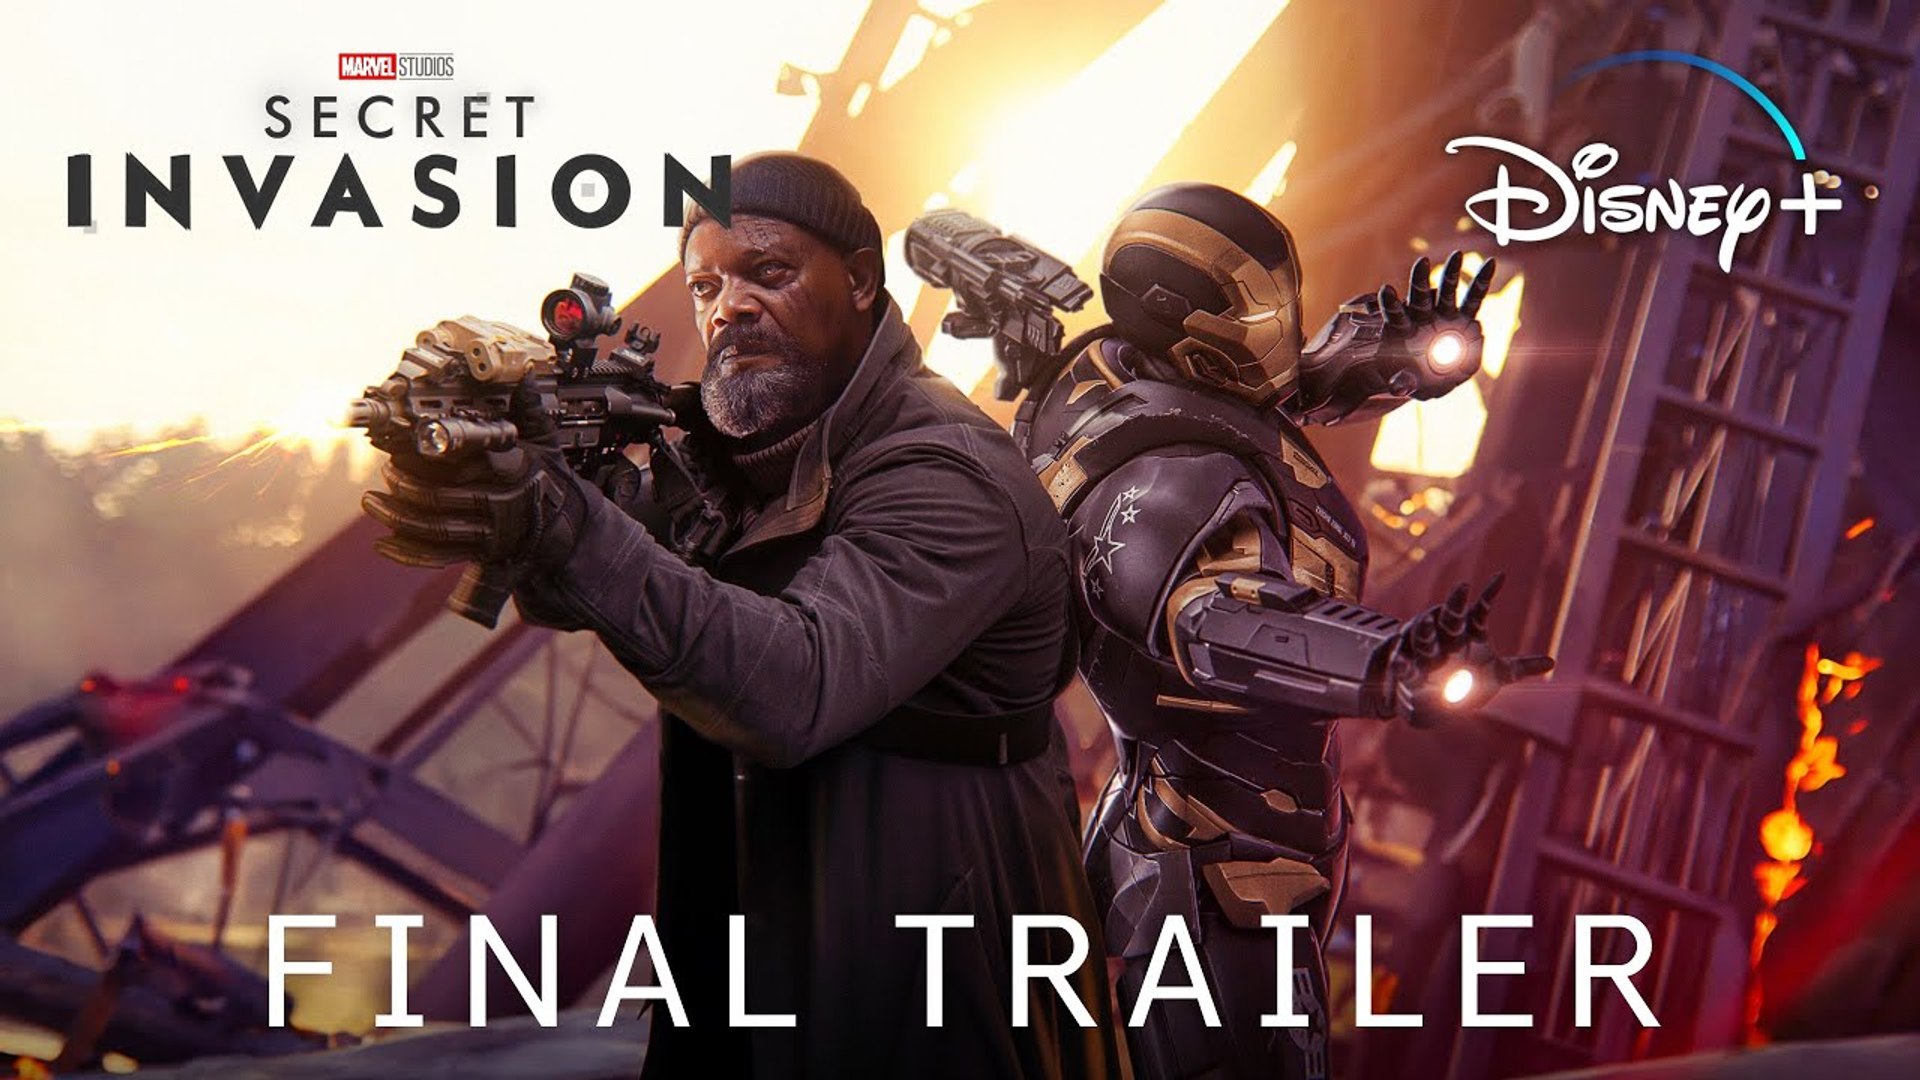 Marvel Studios' SECRET INVASION, EPISODE 6 'Season Finale' PROMO TRAILER